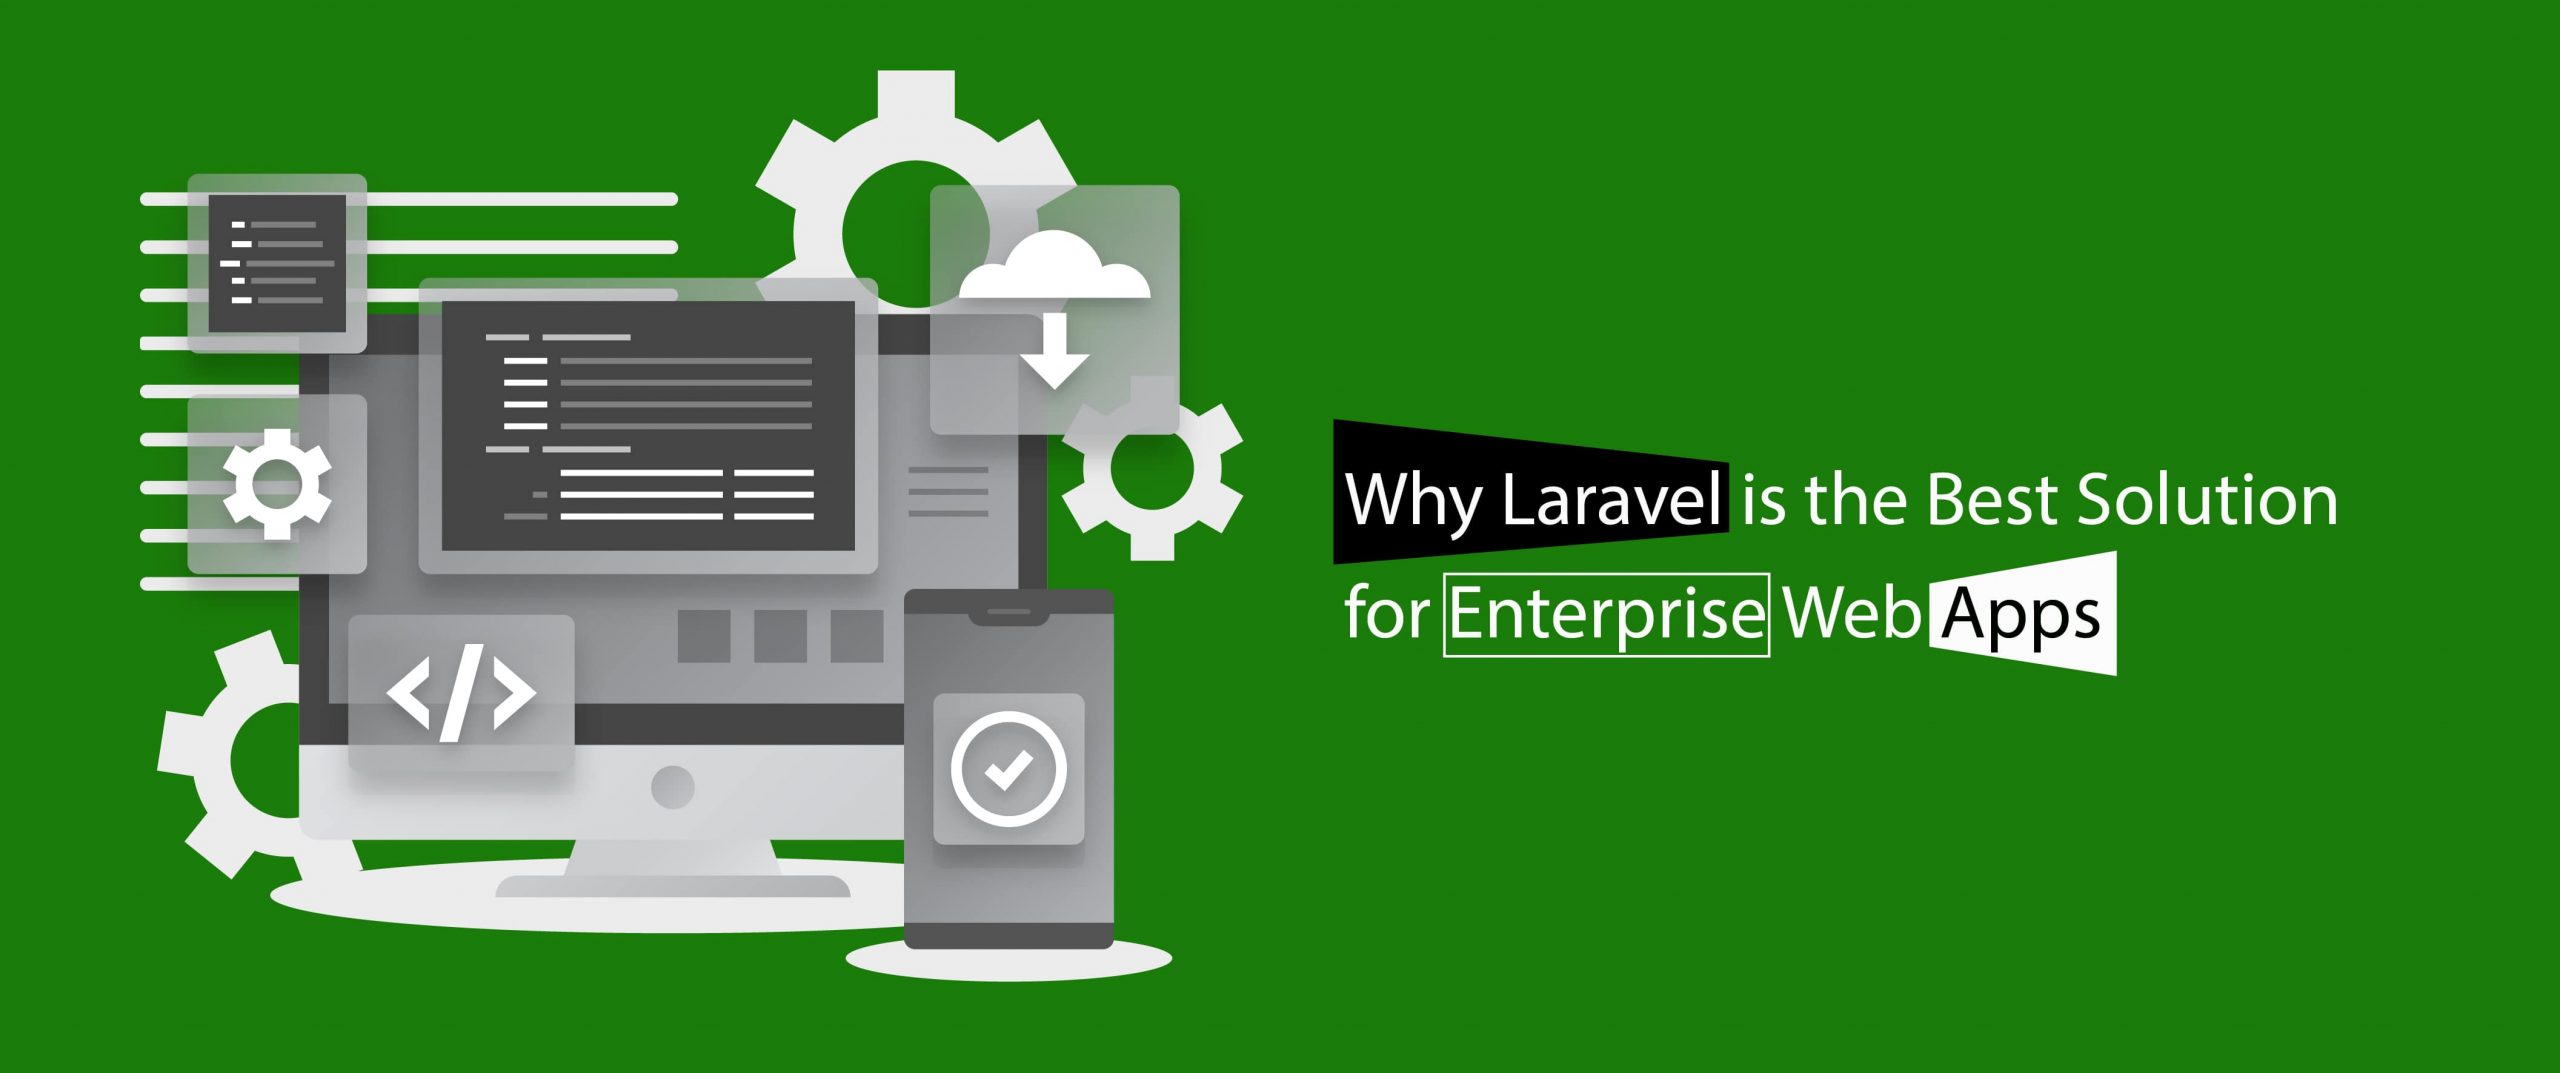 Why-Laravel-is-the-Best-Solution-for-Enterprise-